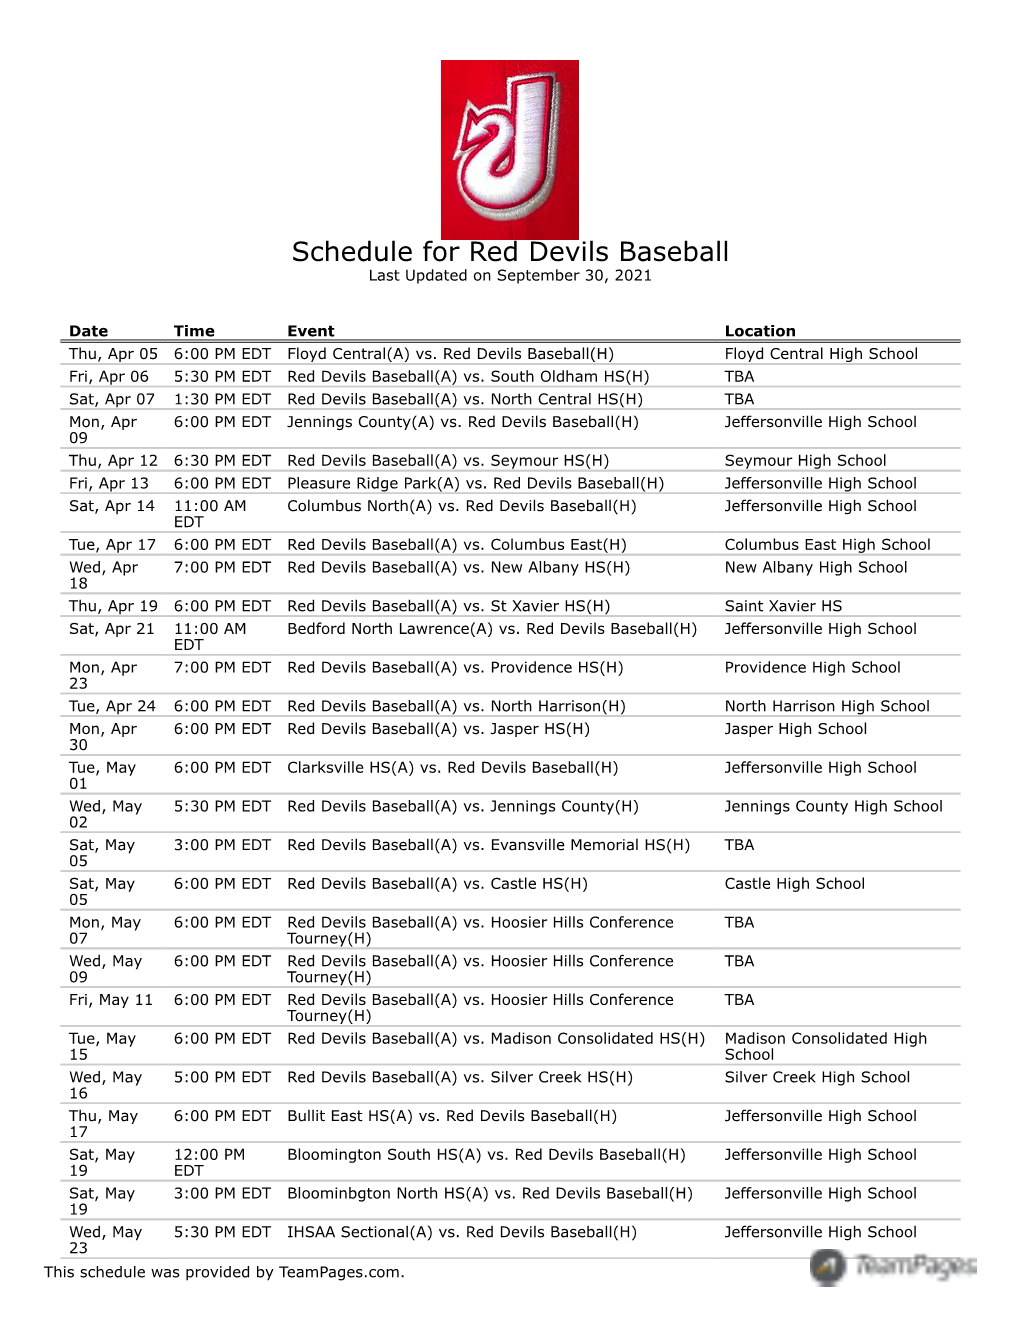 Schedule for Red Devils Baseball Last Updated on September 30, 2021